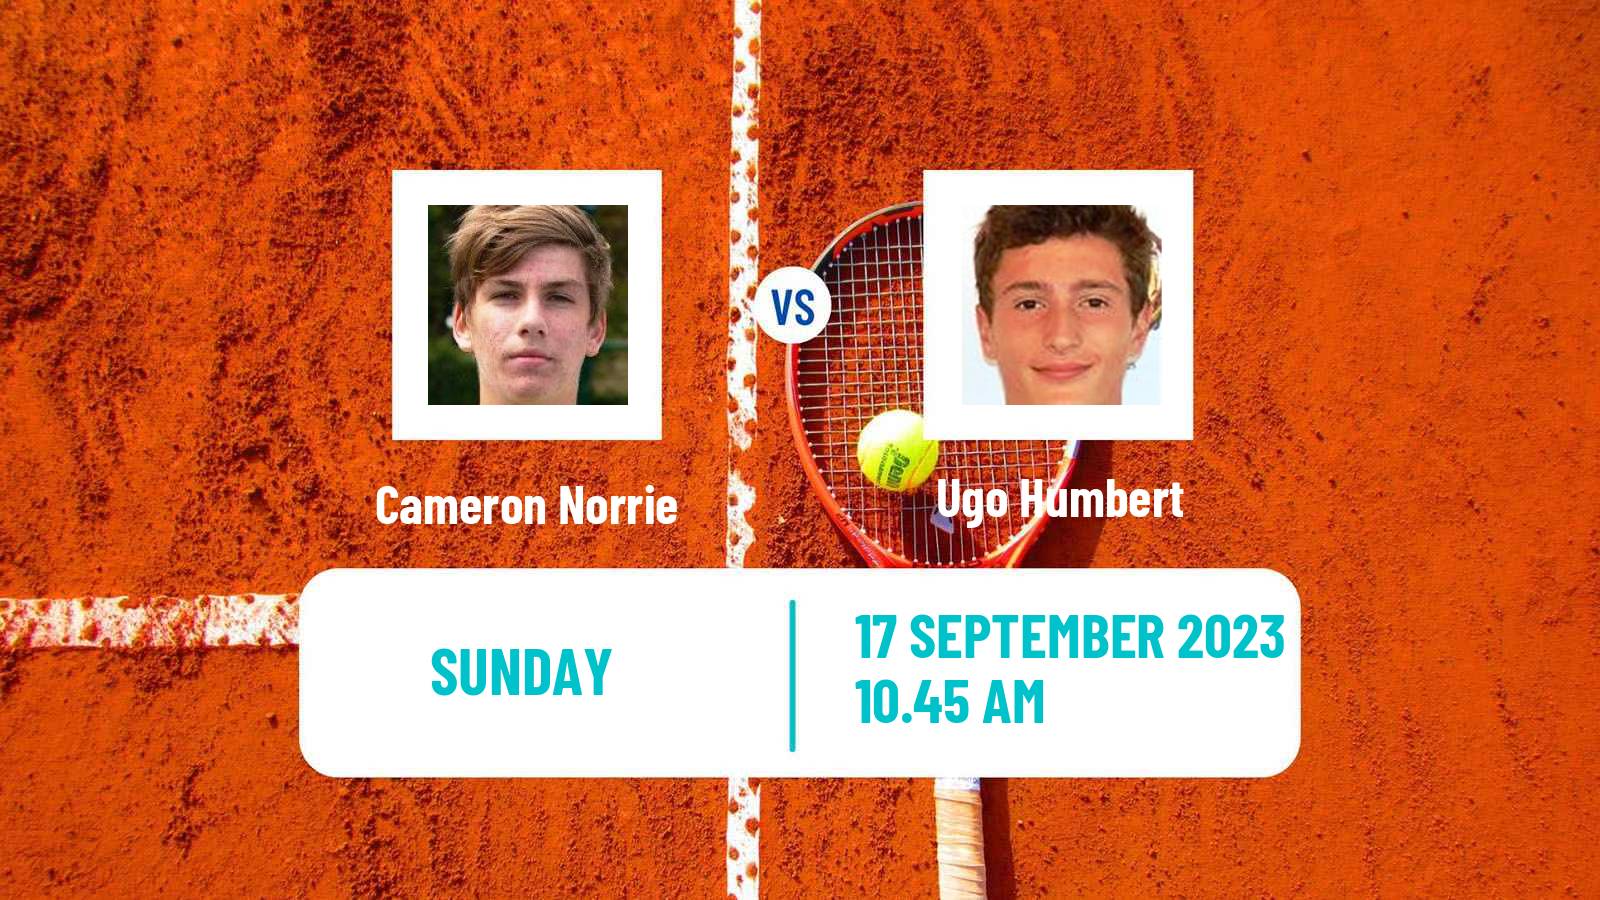 Tennis Davis Cup World Group Cameron Norrie - Ugo Humbert